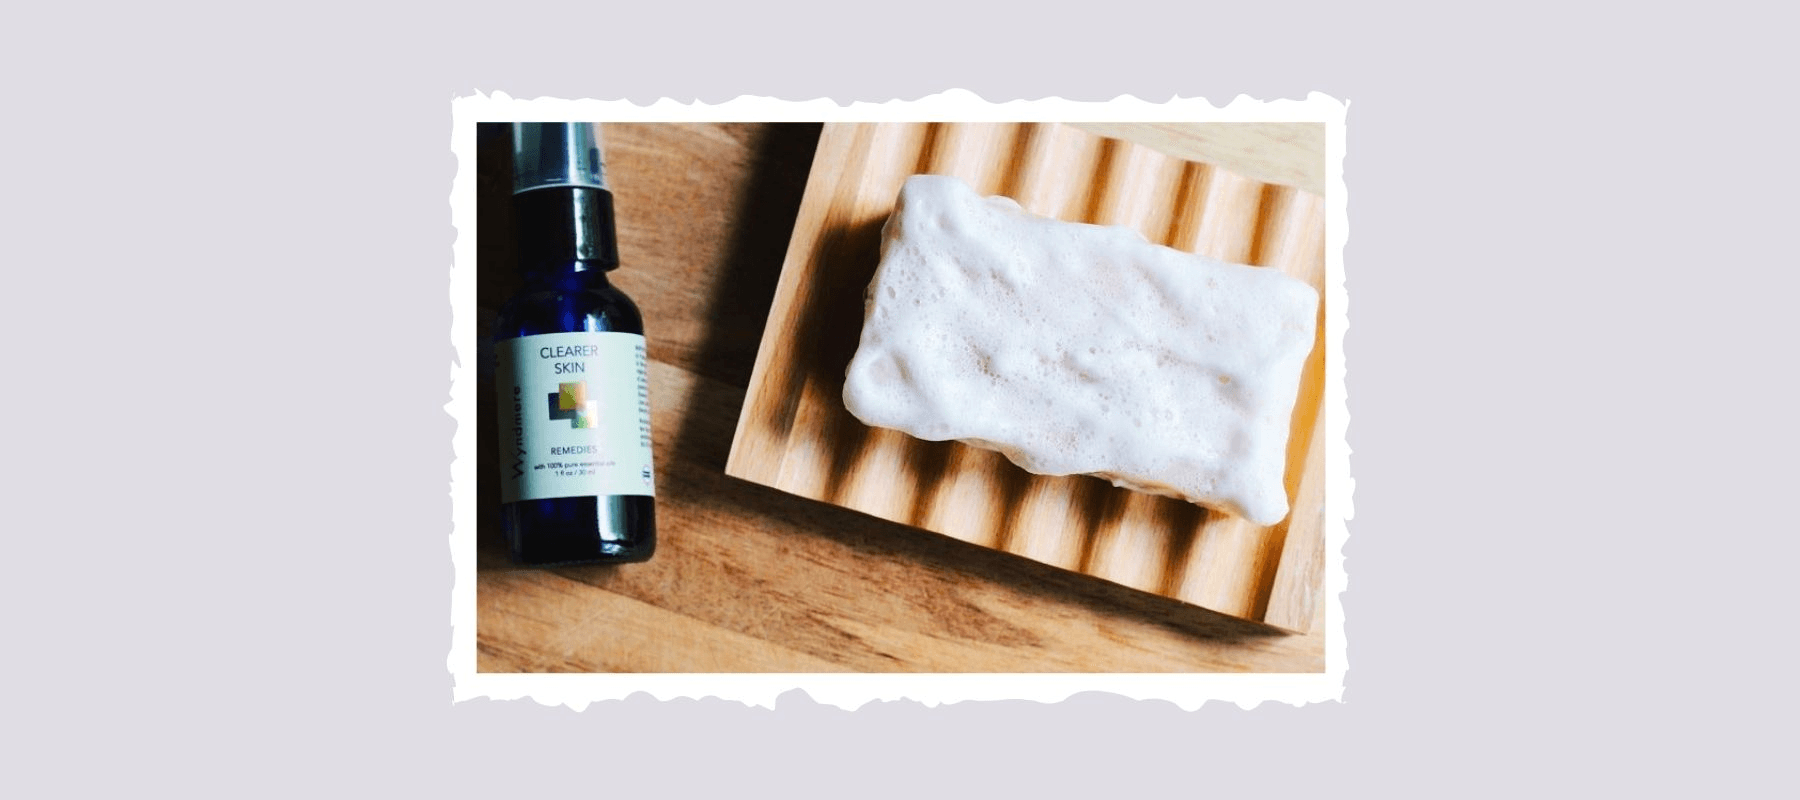 Clearer Skin remedy near soap on wooden tray